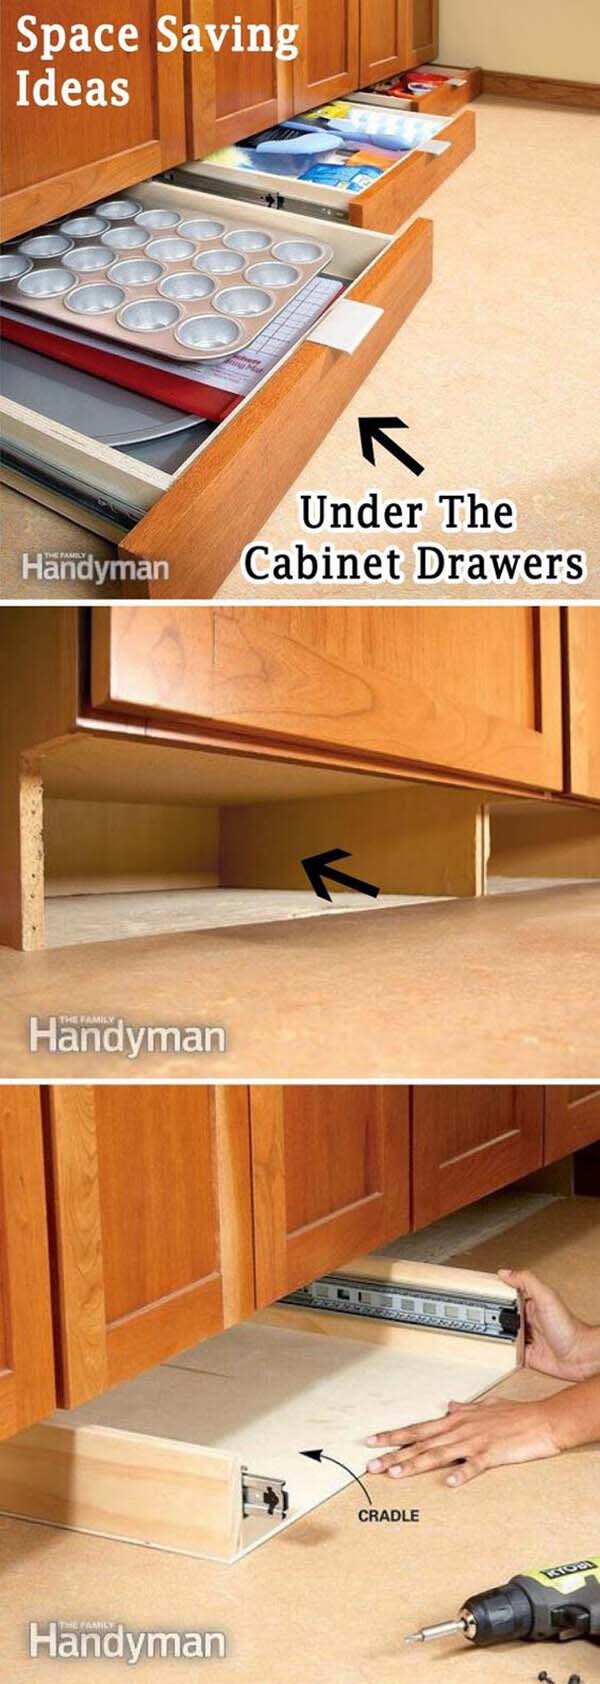 Under-Cabinet Drawers #hideaway #projects #decorhomeideas